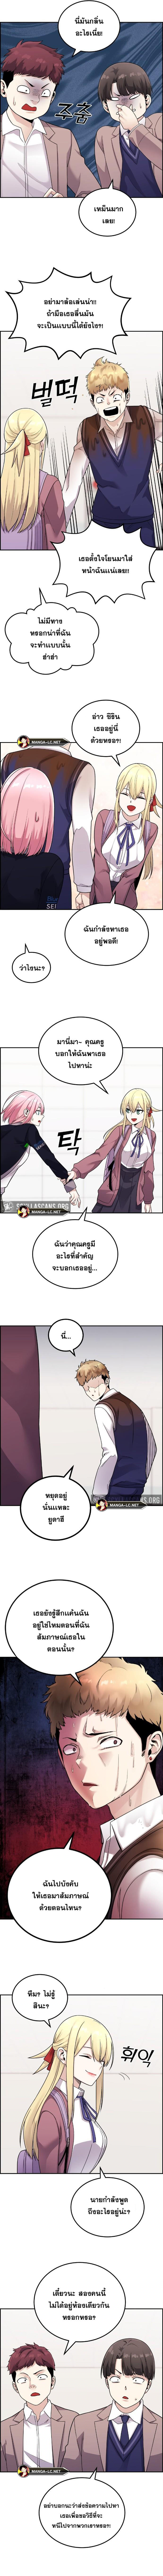 Webtoon Character Na Kang Lim ร ยธโ€ขร ยธยญร ยธโขร ยธโ€”ร ยธยตร ยนห 21 (6)